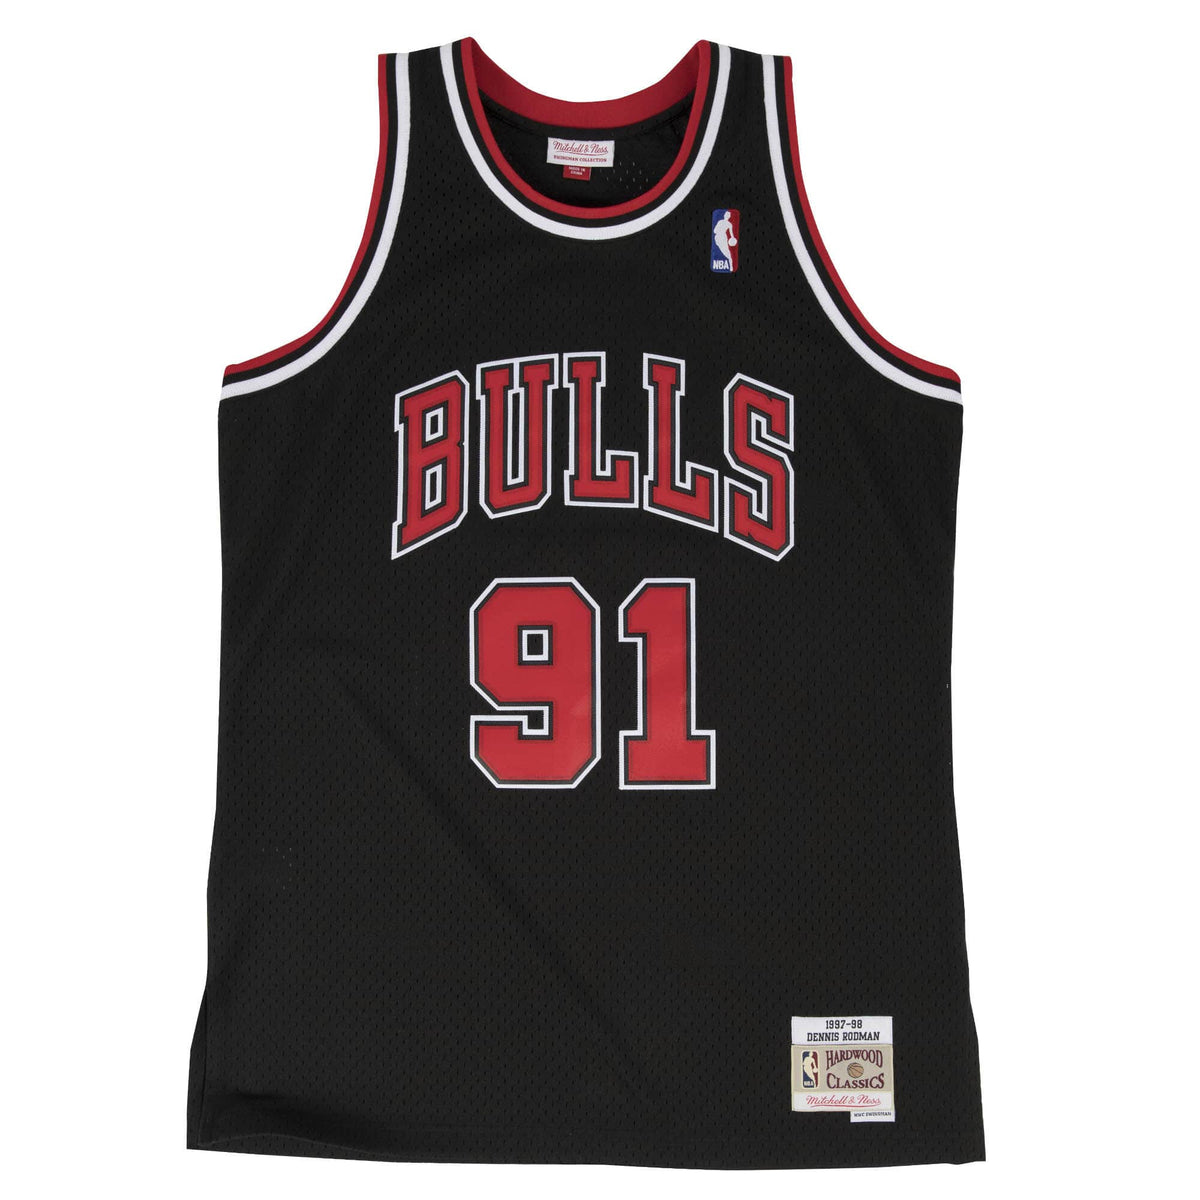 Toni Kukoc Chicago Bulls Mitchell & Ness 1997/98 Hardwood Classics